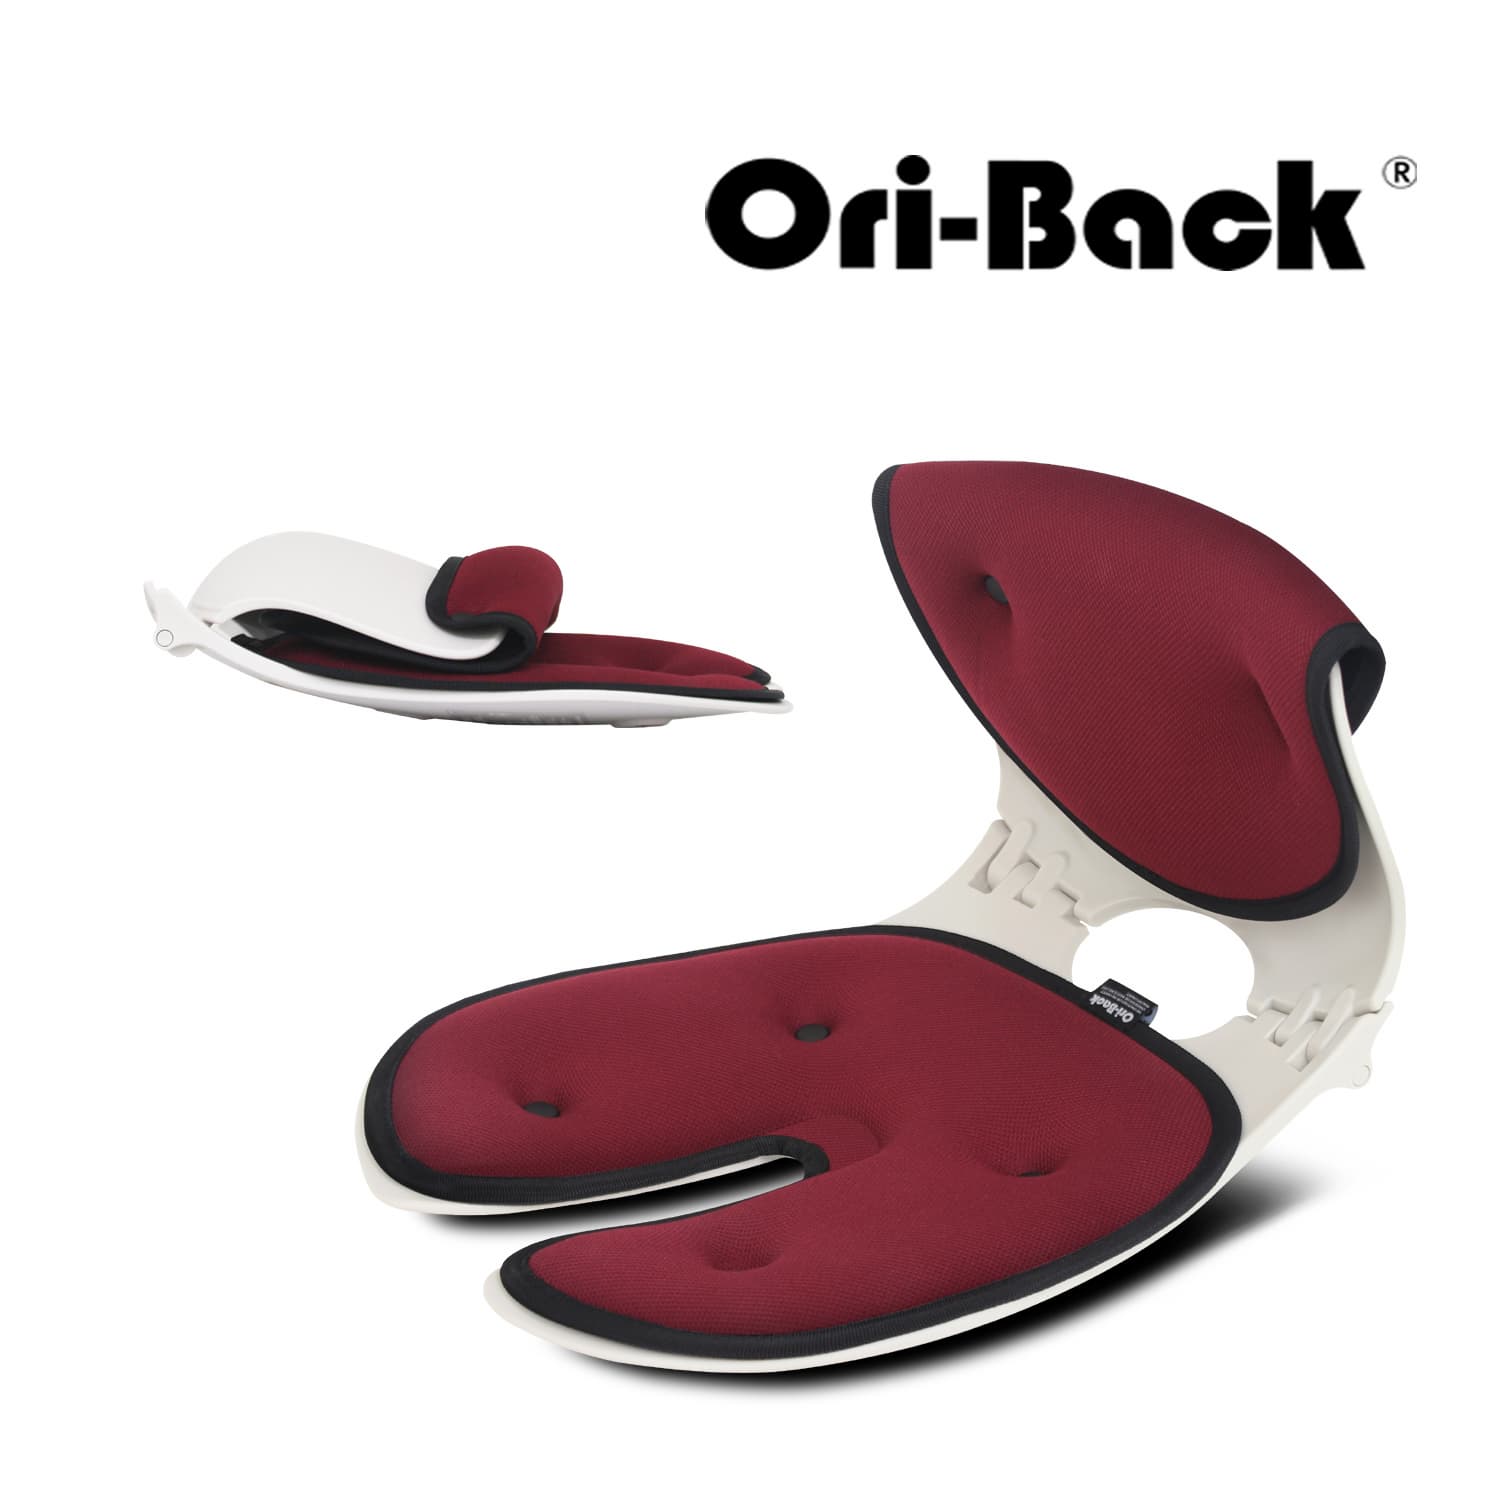 Ori_Back Chair _ Posture correction chair